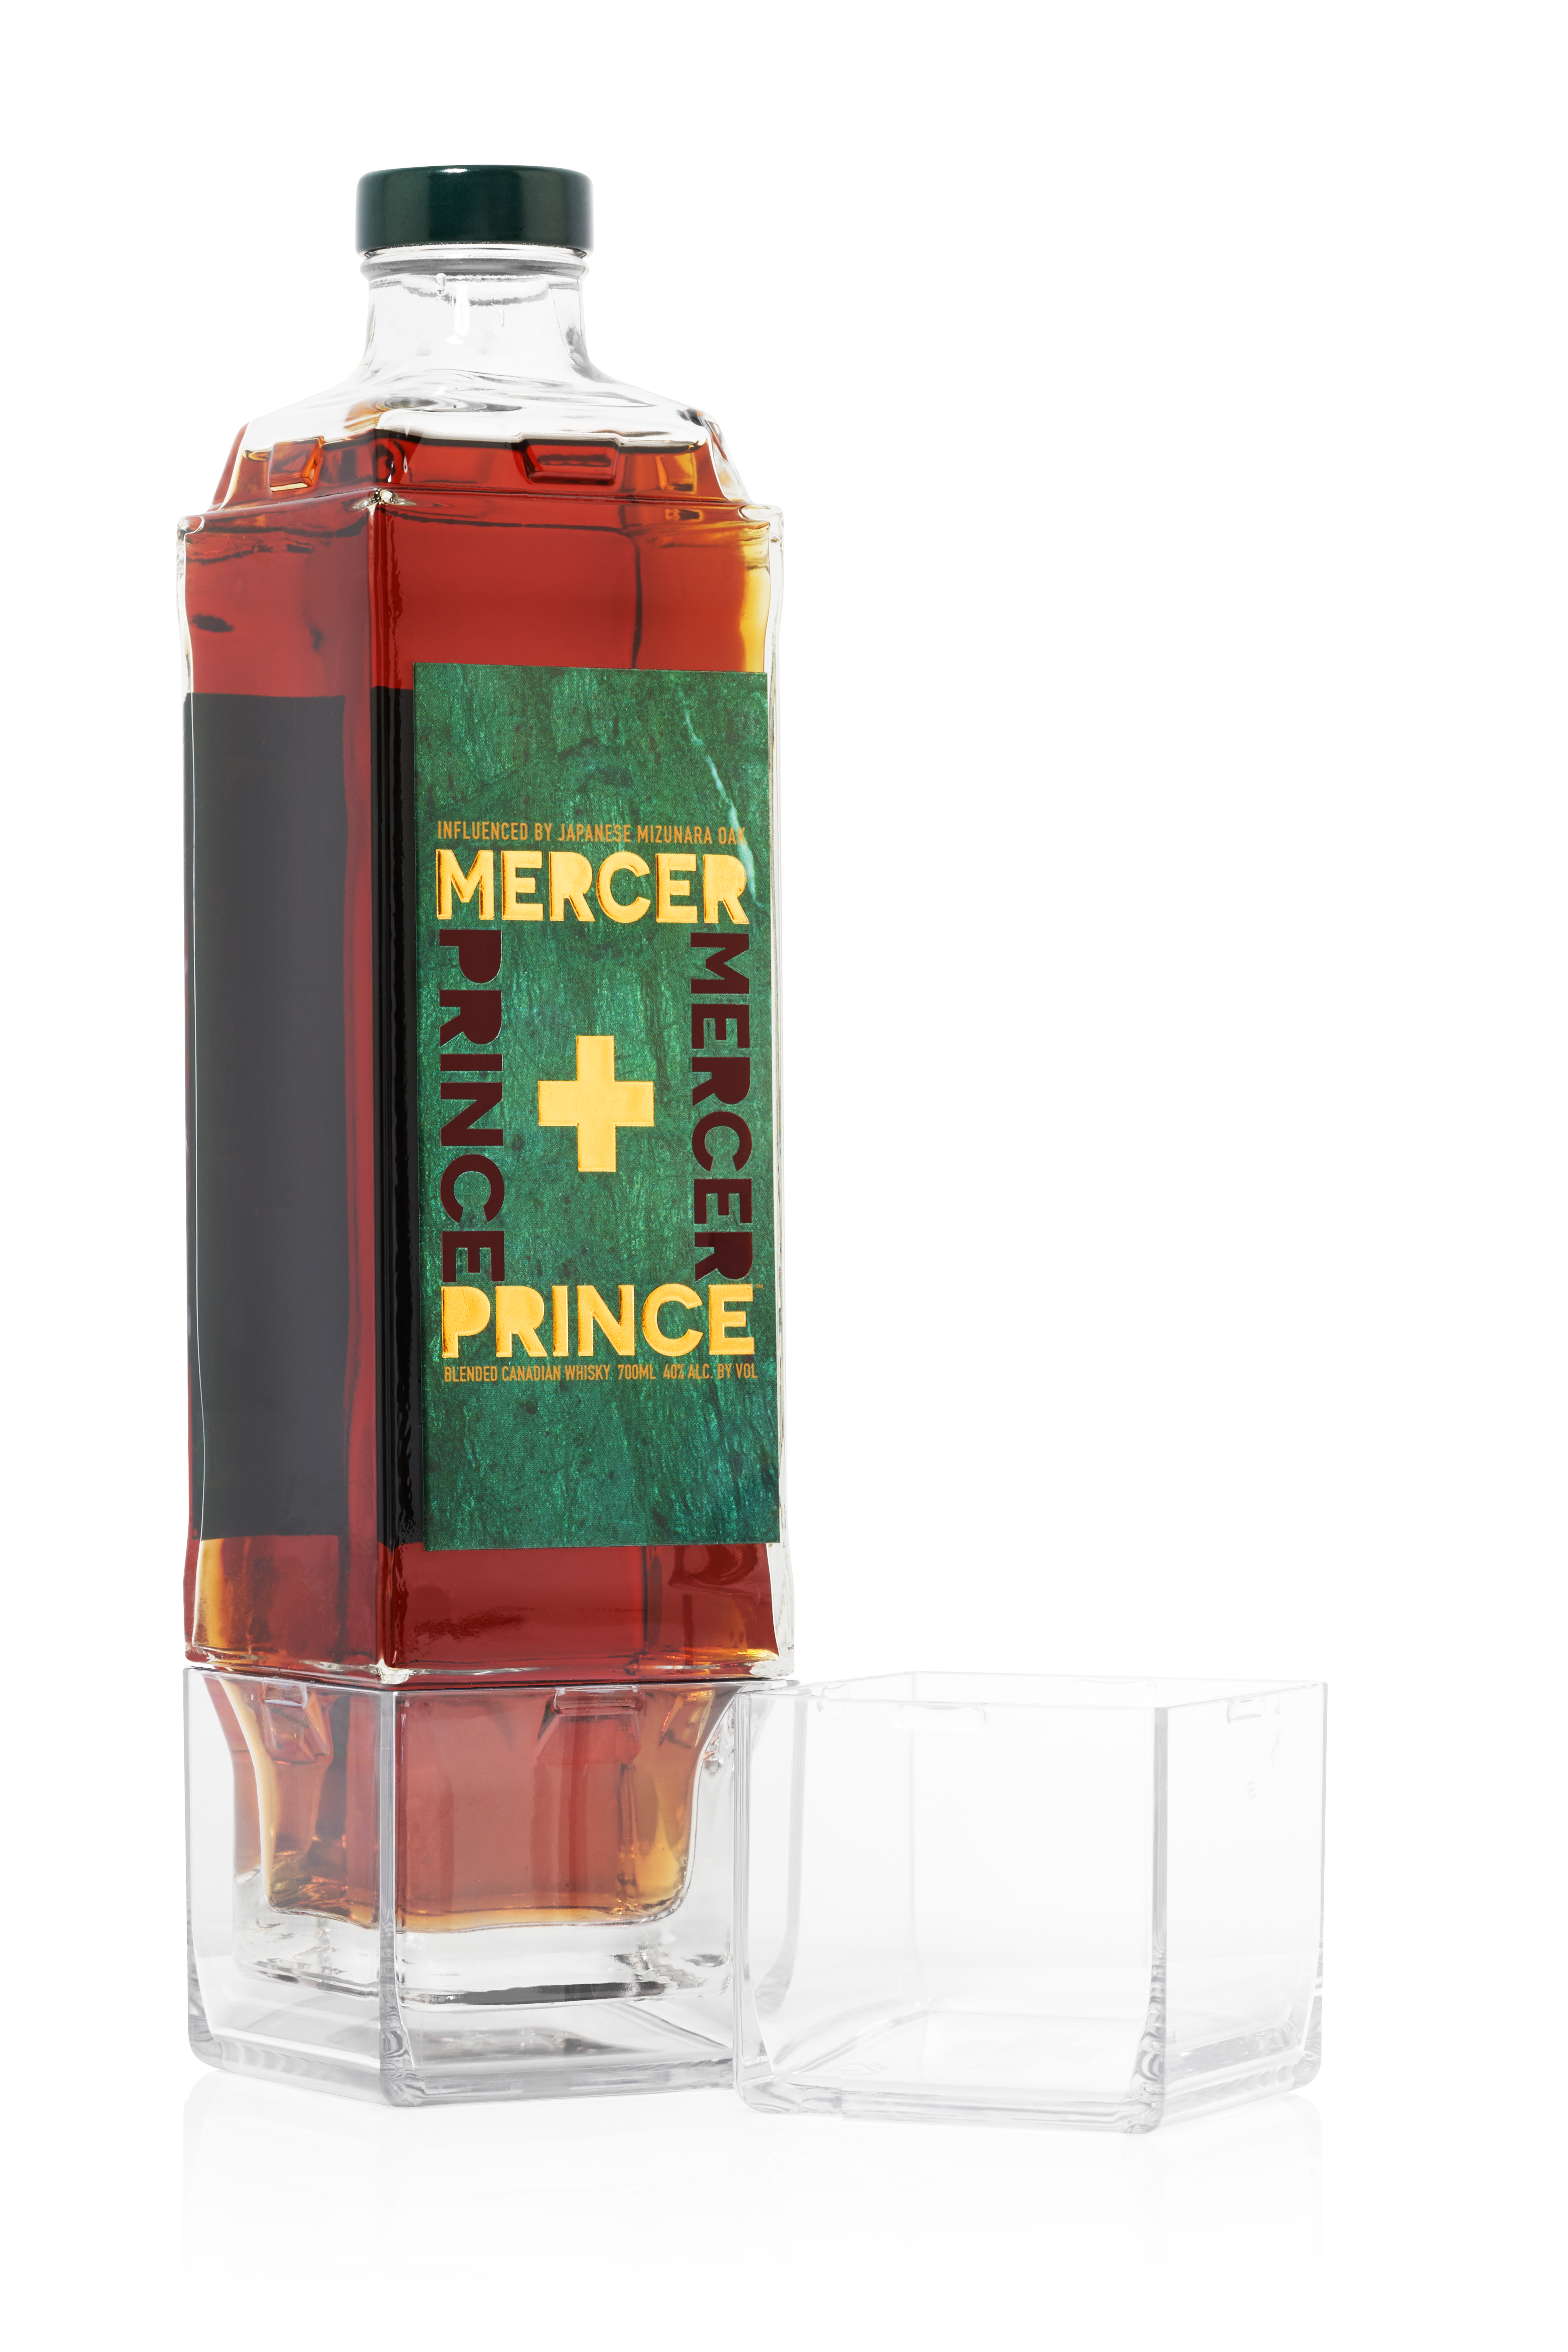 MERCER + PRINCE™